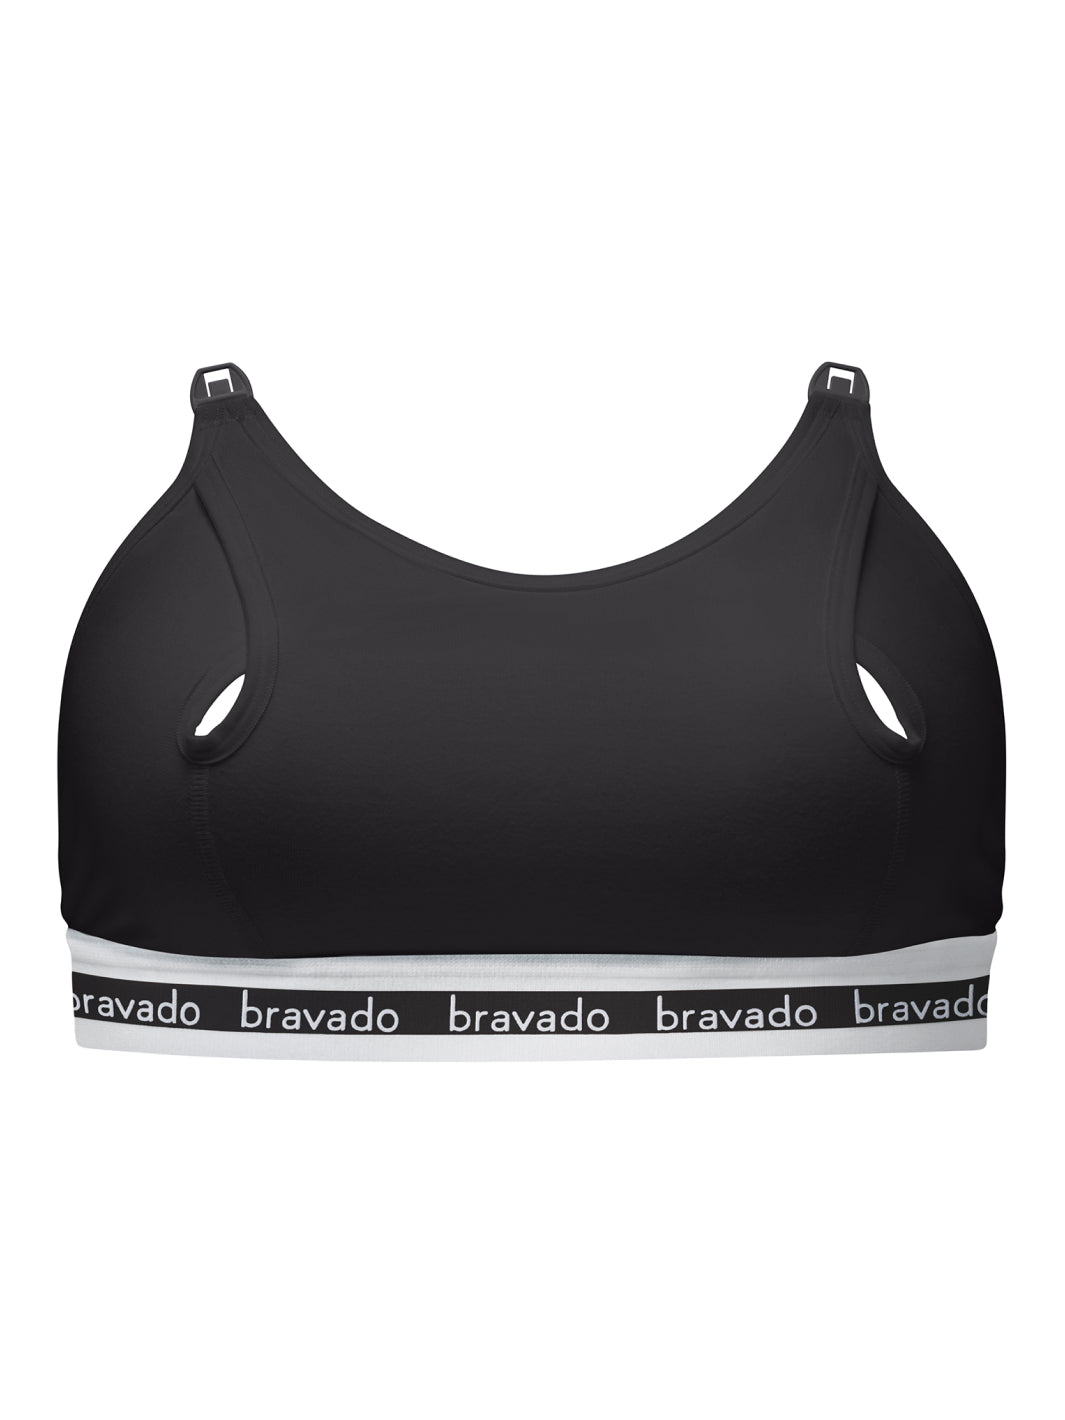 Bravado! Women's Pumping and Nursing Bra Small Hands Free NWT Black